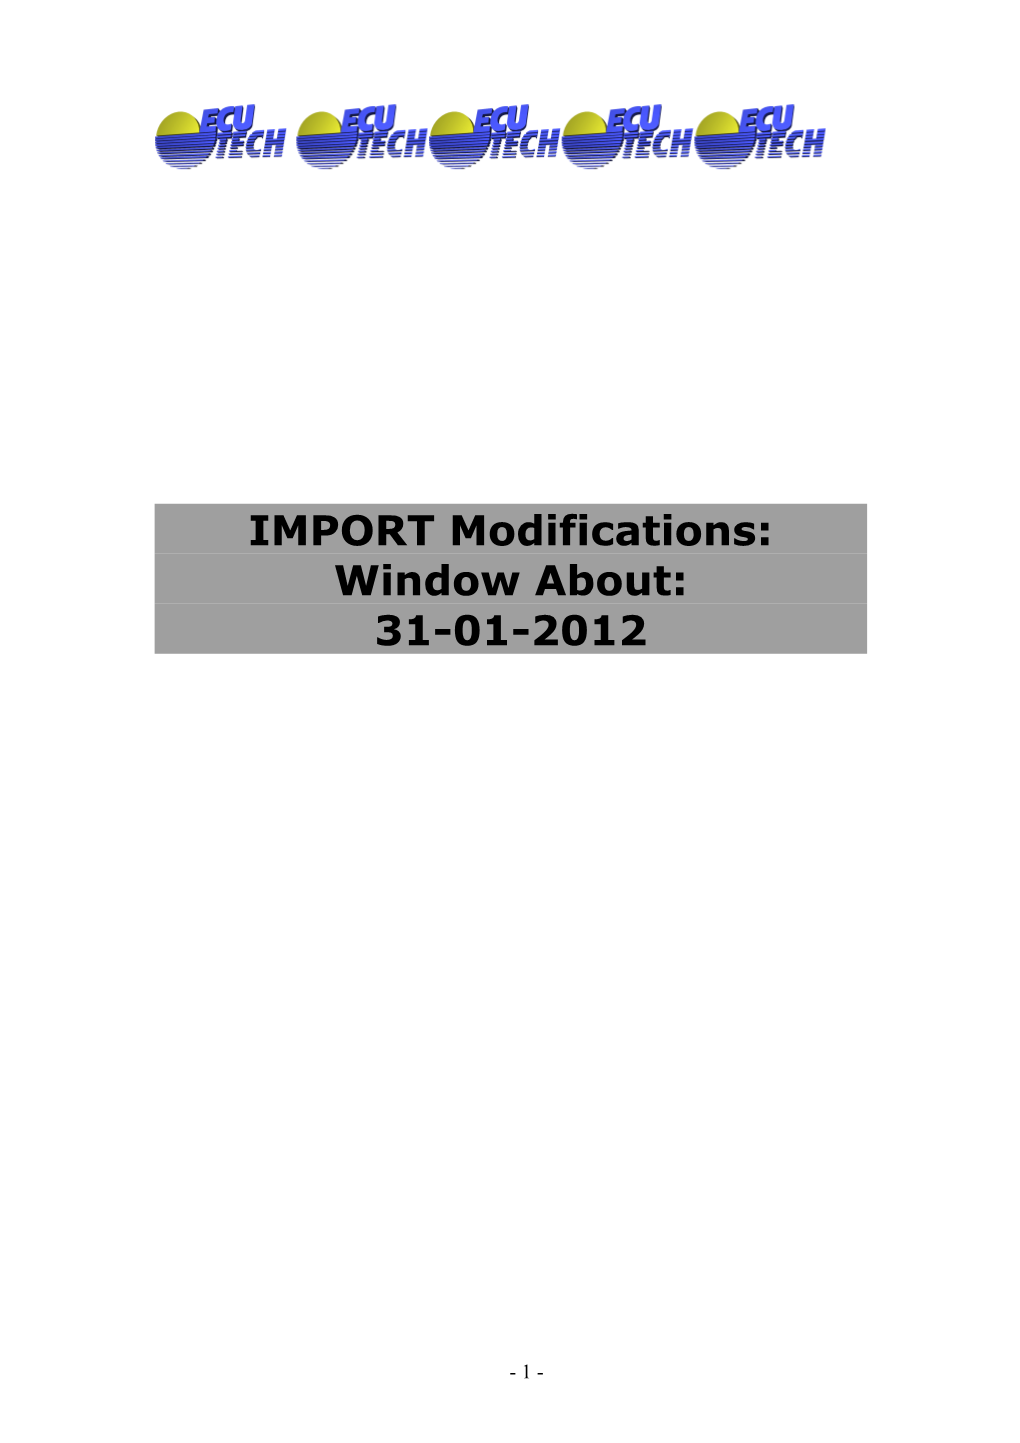 IMPORT Modifications